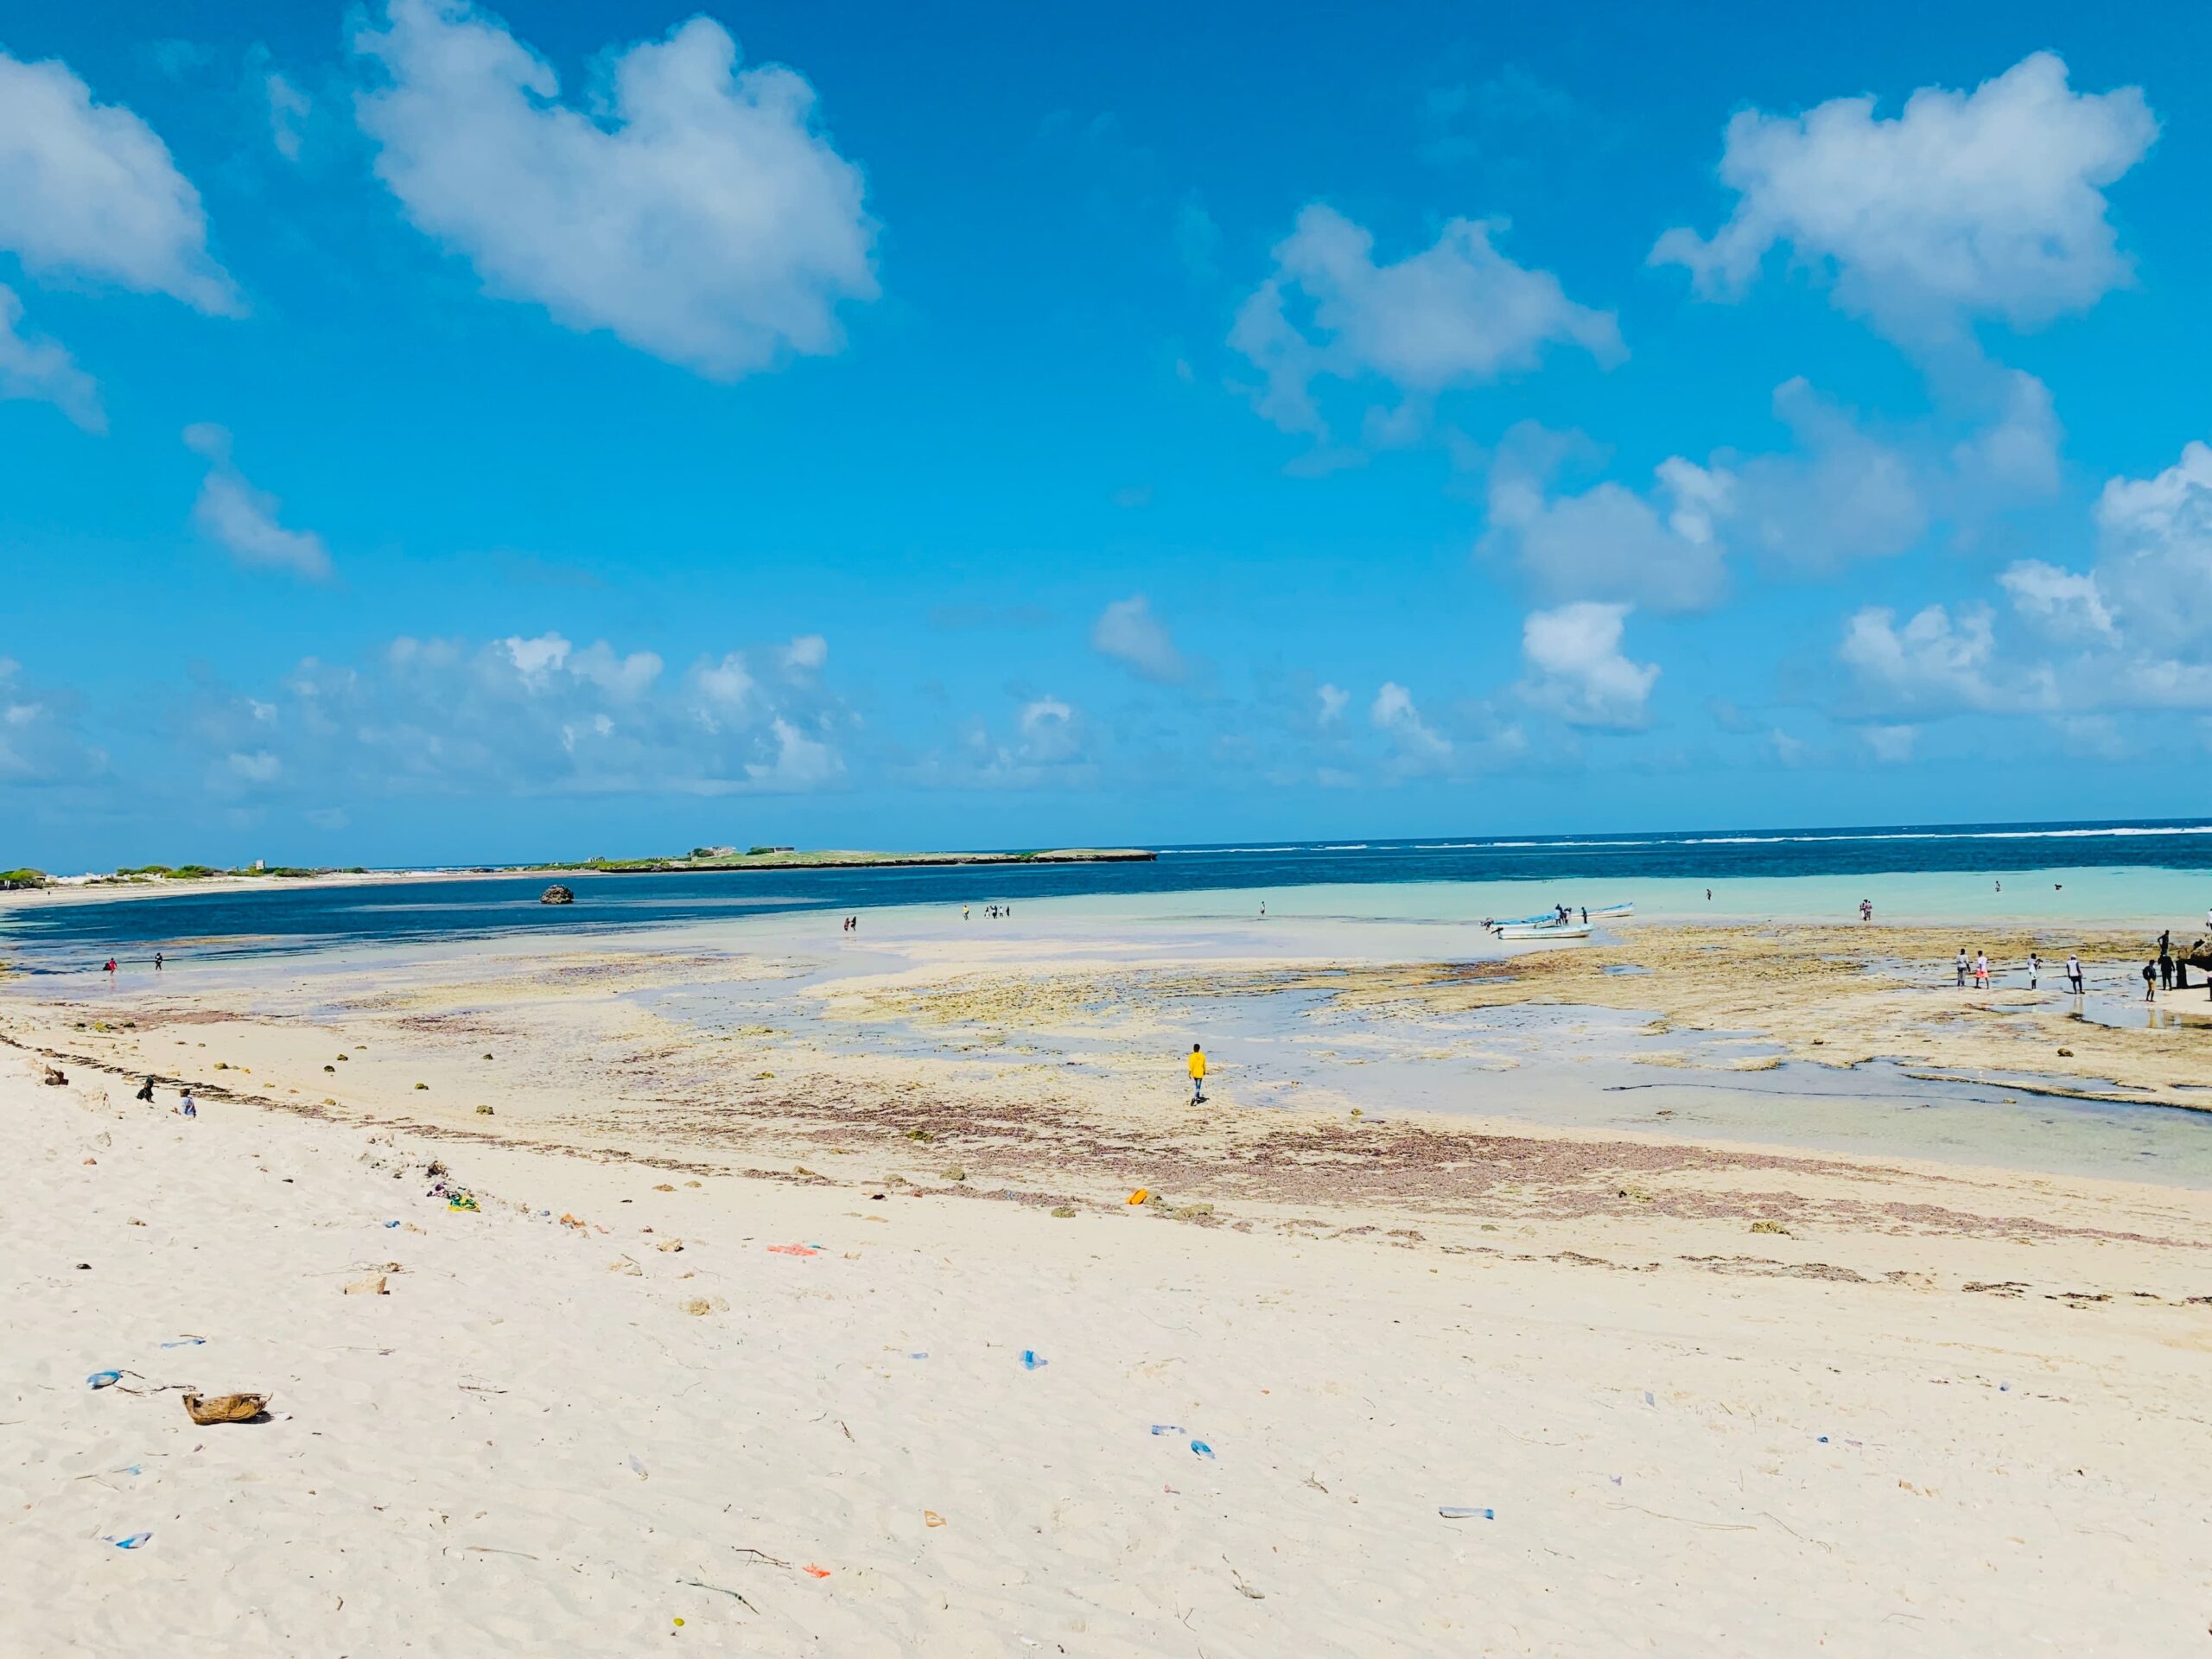 Jazeera beach, Mogadishu, Somalia